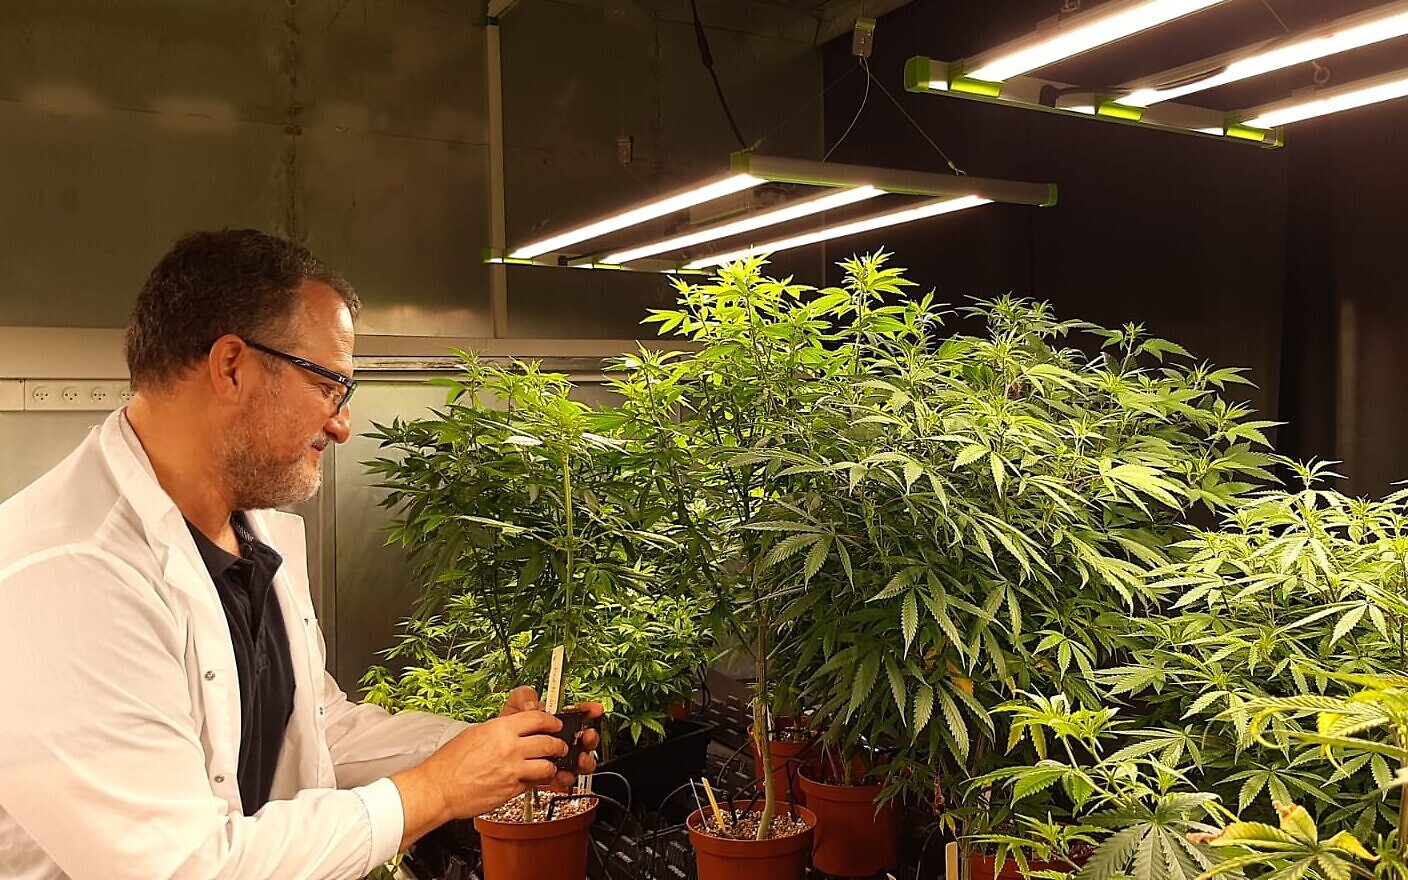 7 Smokable Plants You Can Grow That Aren't Marijuana - Modern Farmer